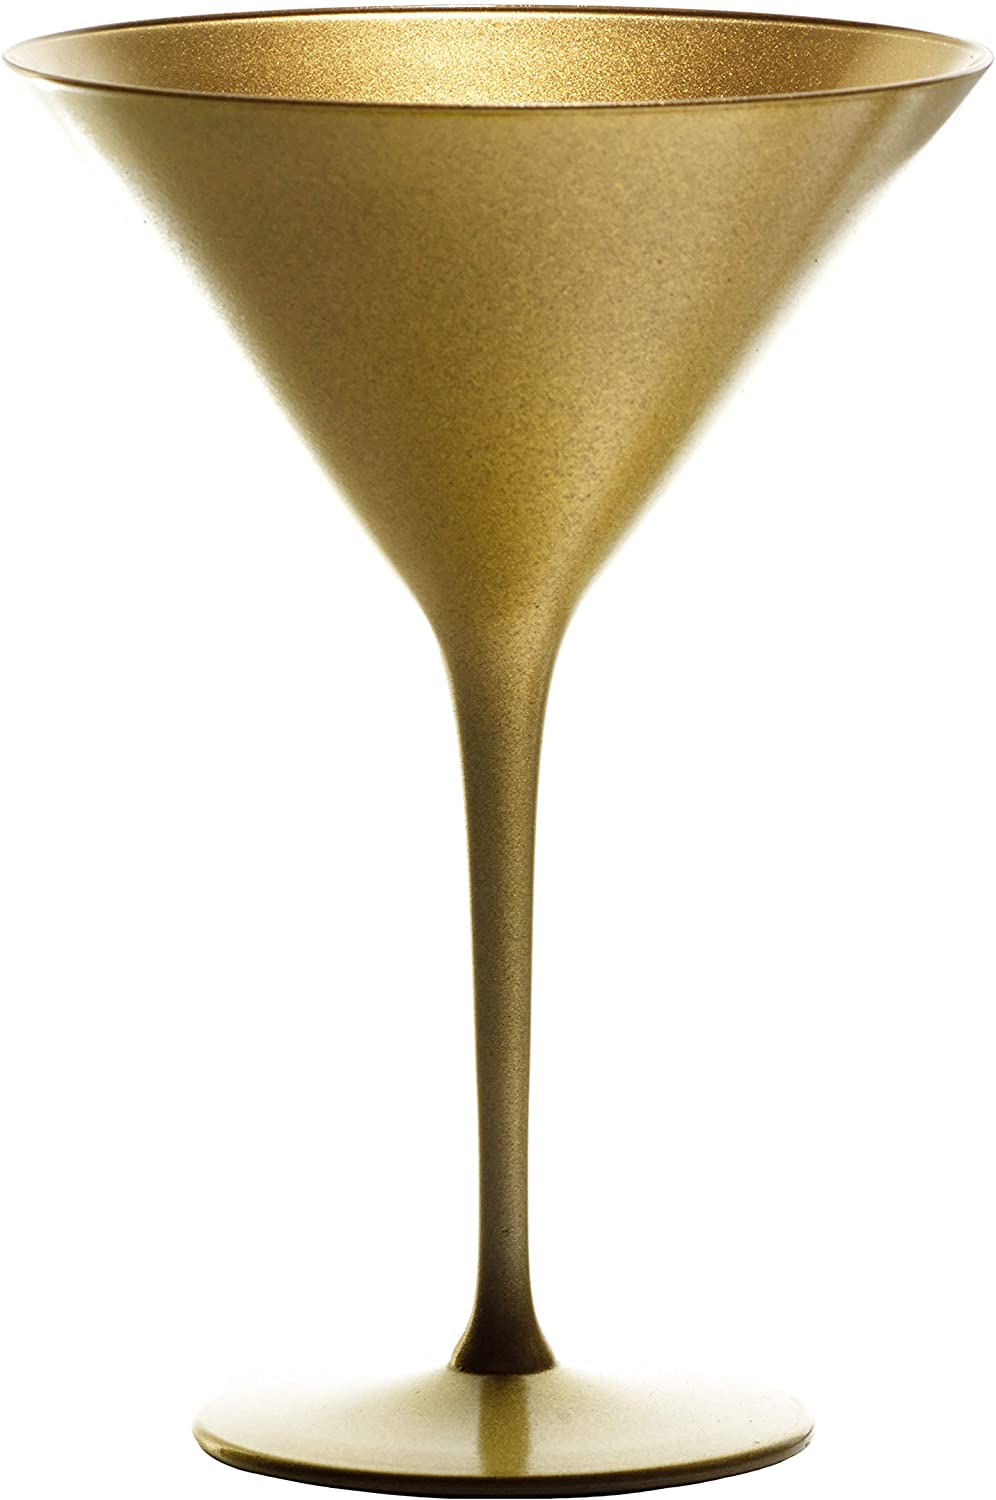 Stölzle Lausitz Elements Cocktail Bowl 240 ml I Martini Glasses Set of 6 I Gold I Cocktail Glasses Dishwasher Safe & Shatterproof I High Quality Crystal Glass I Martini Glasses